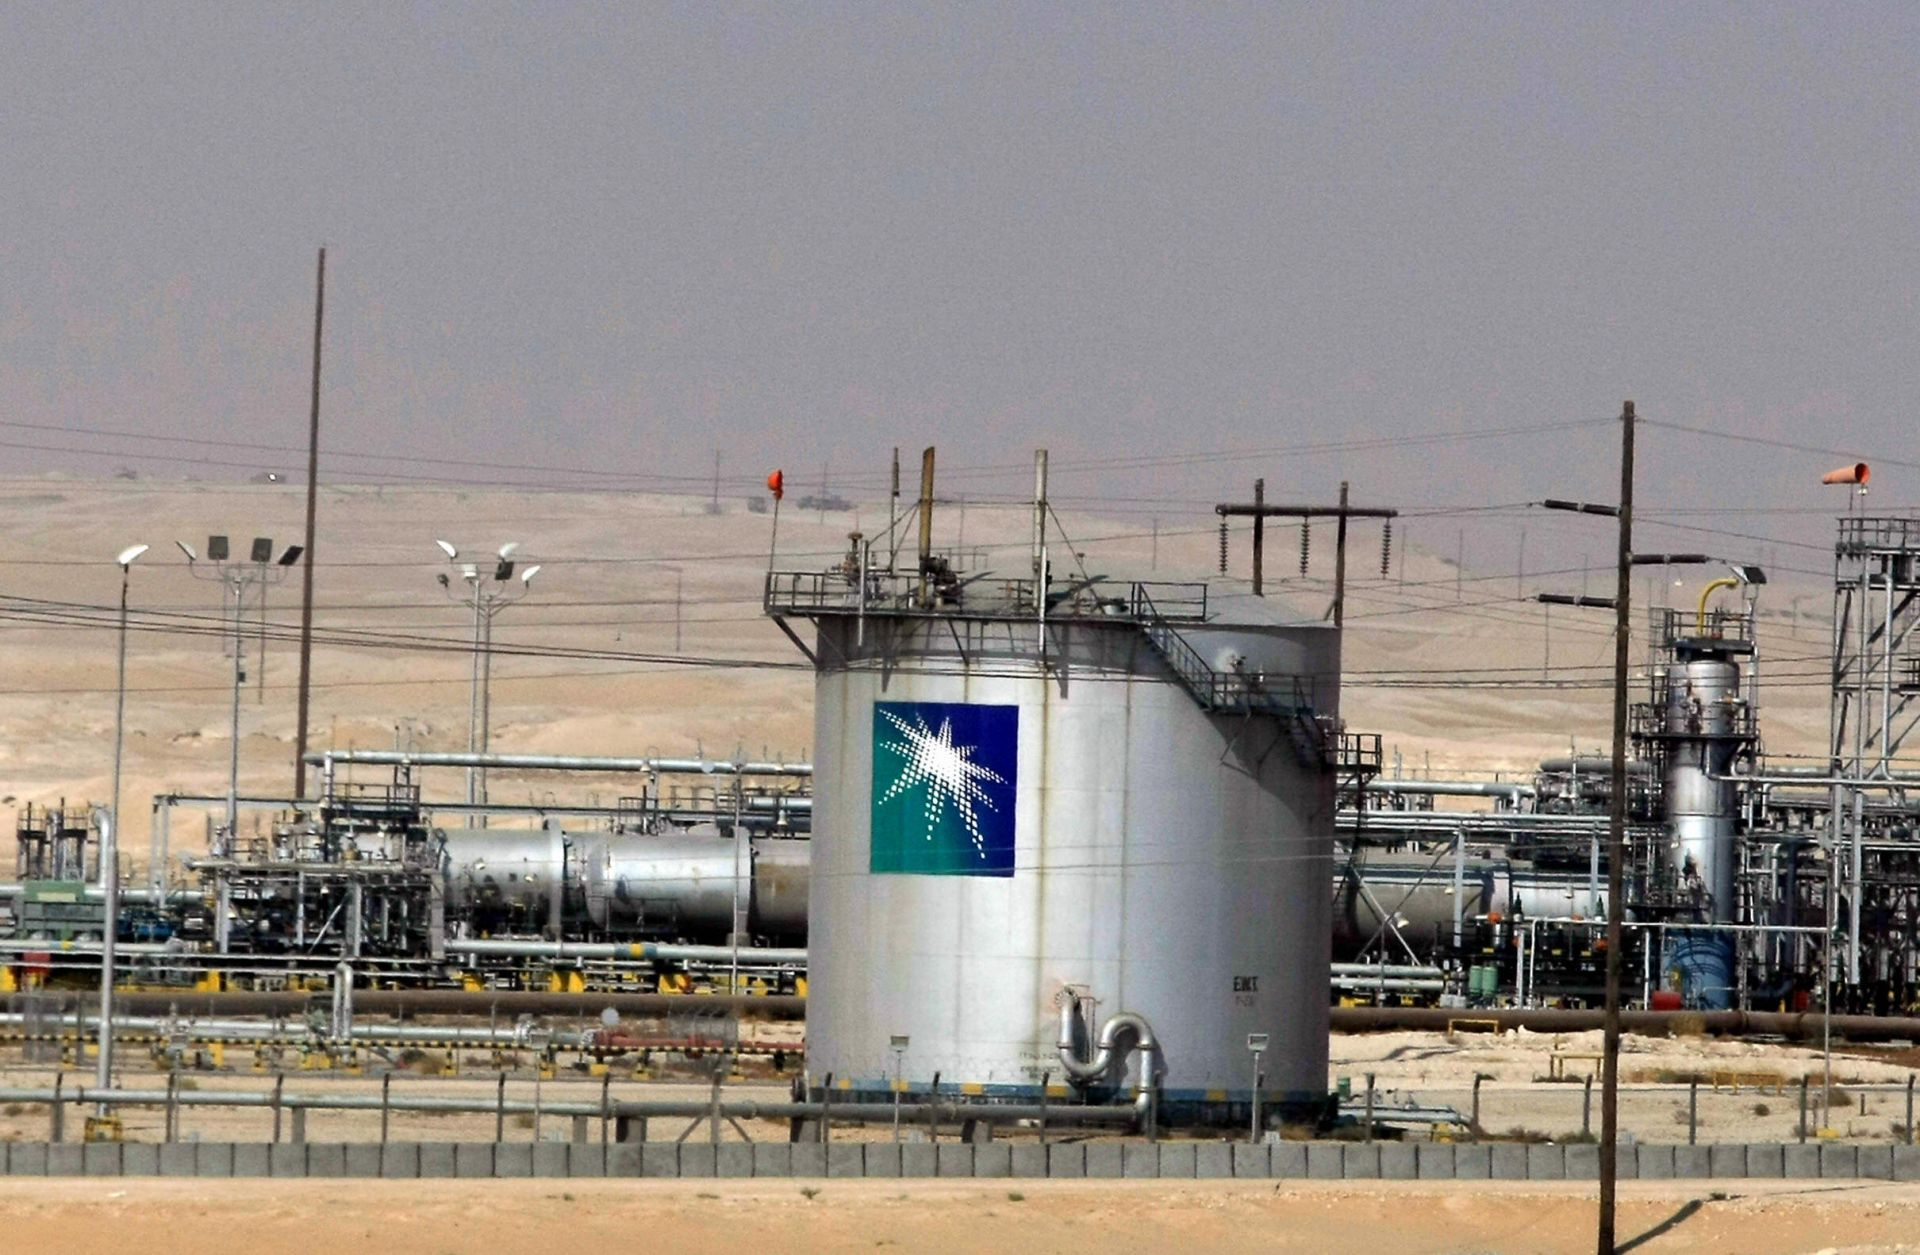 A Saudi Aramco oil facility in Dammam, about 450 kilometers east of Riyadh.